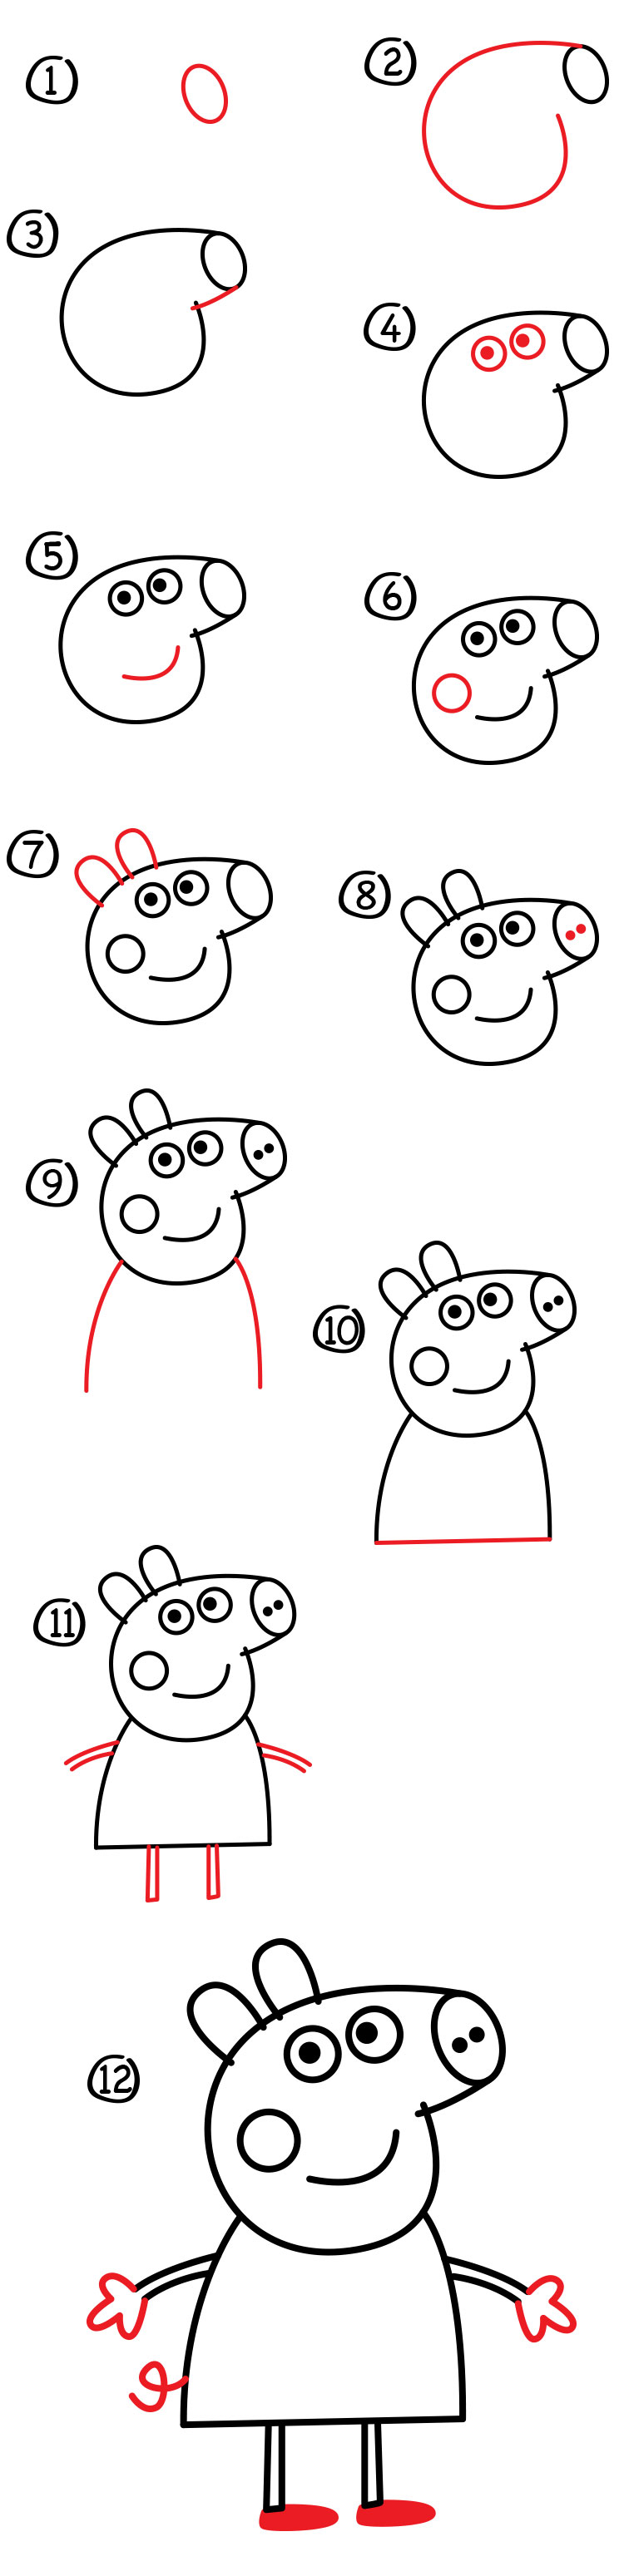 How To Draw Peppa Pig - Art For Kids Hub